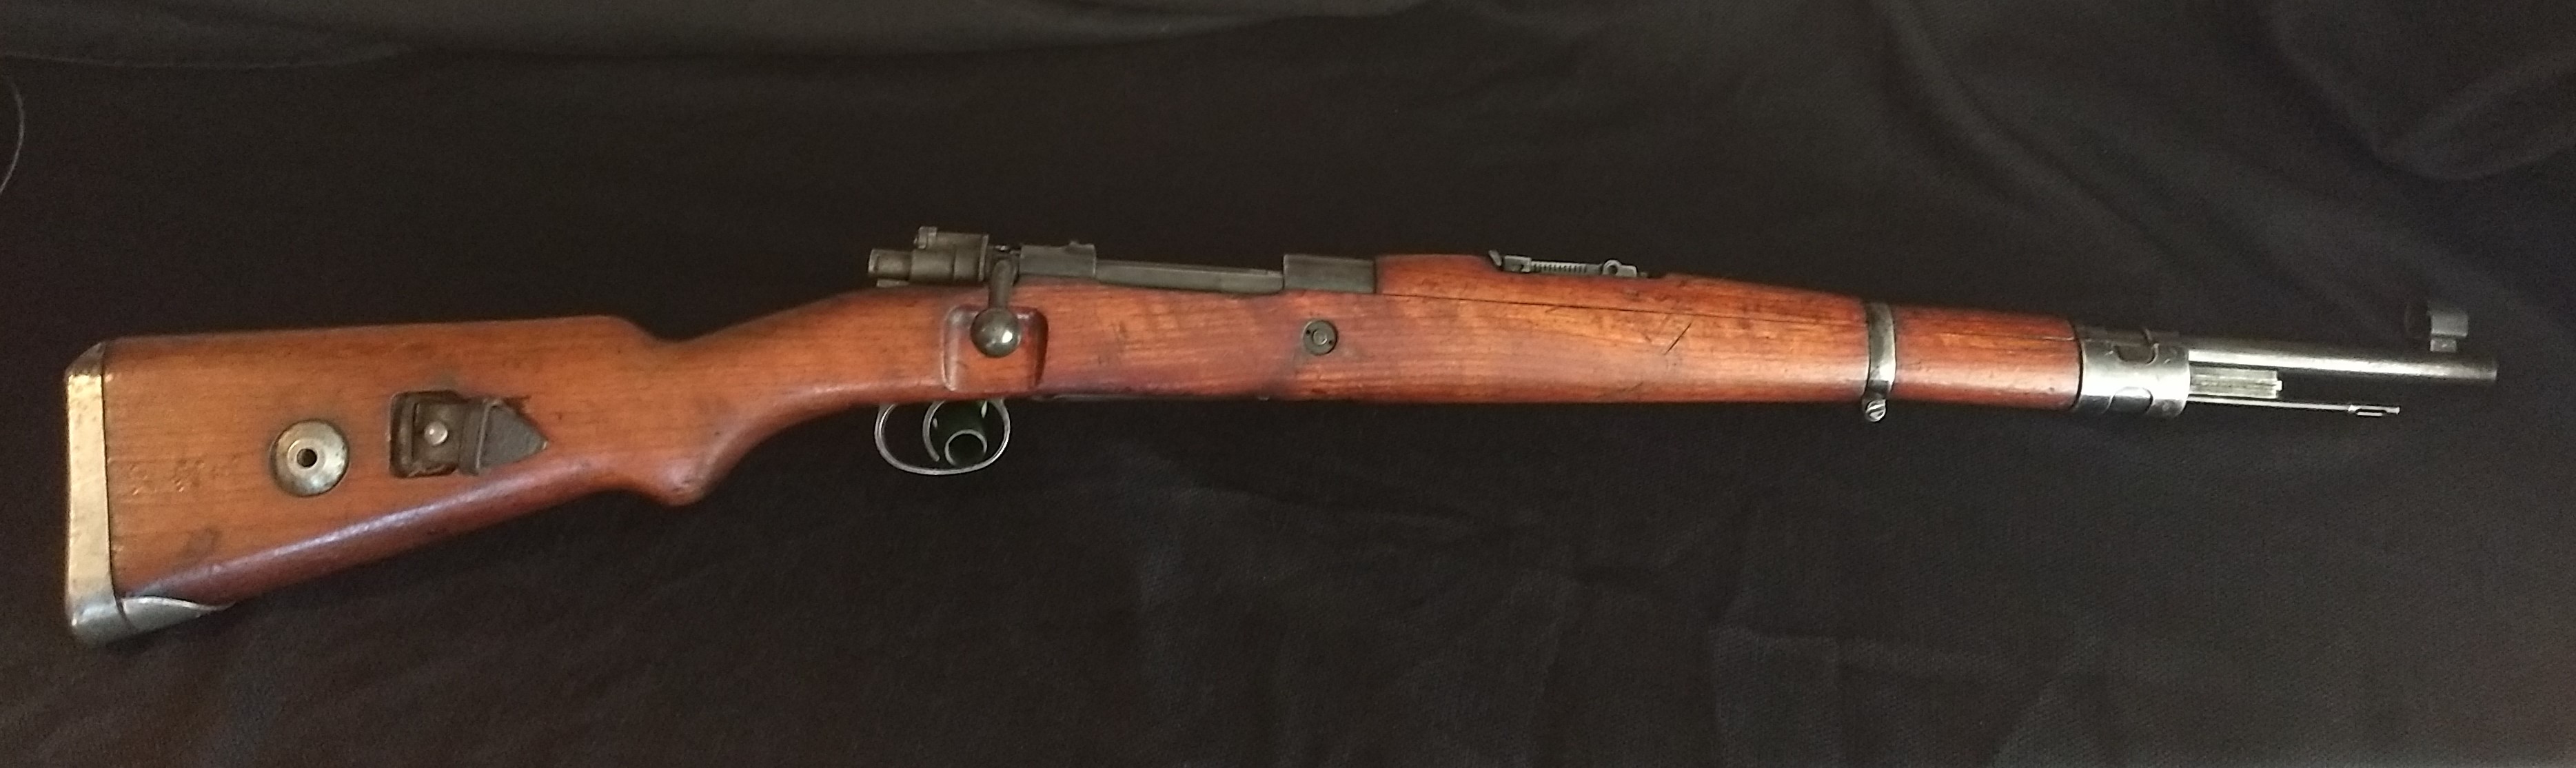 german mauser rifle information